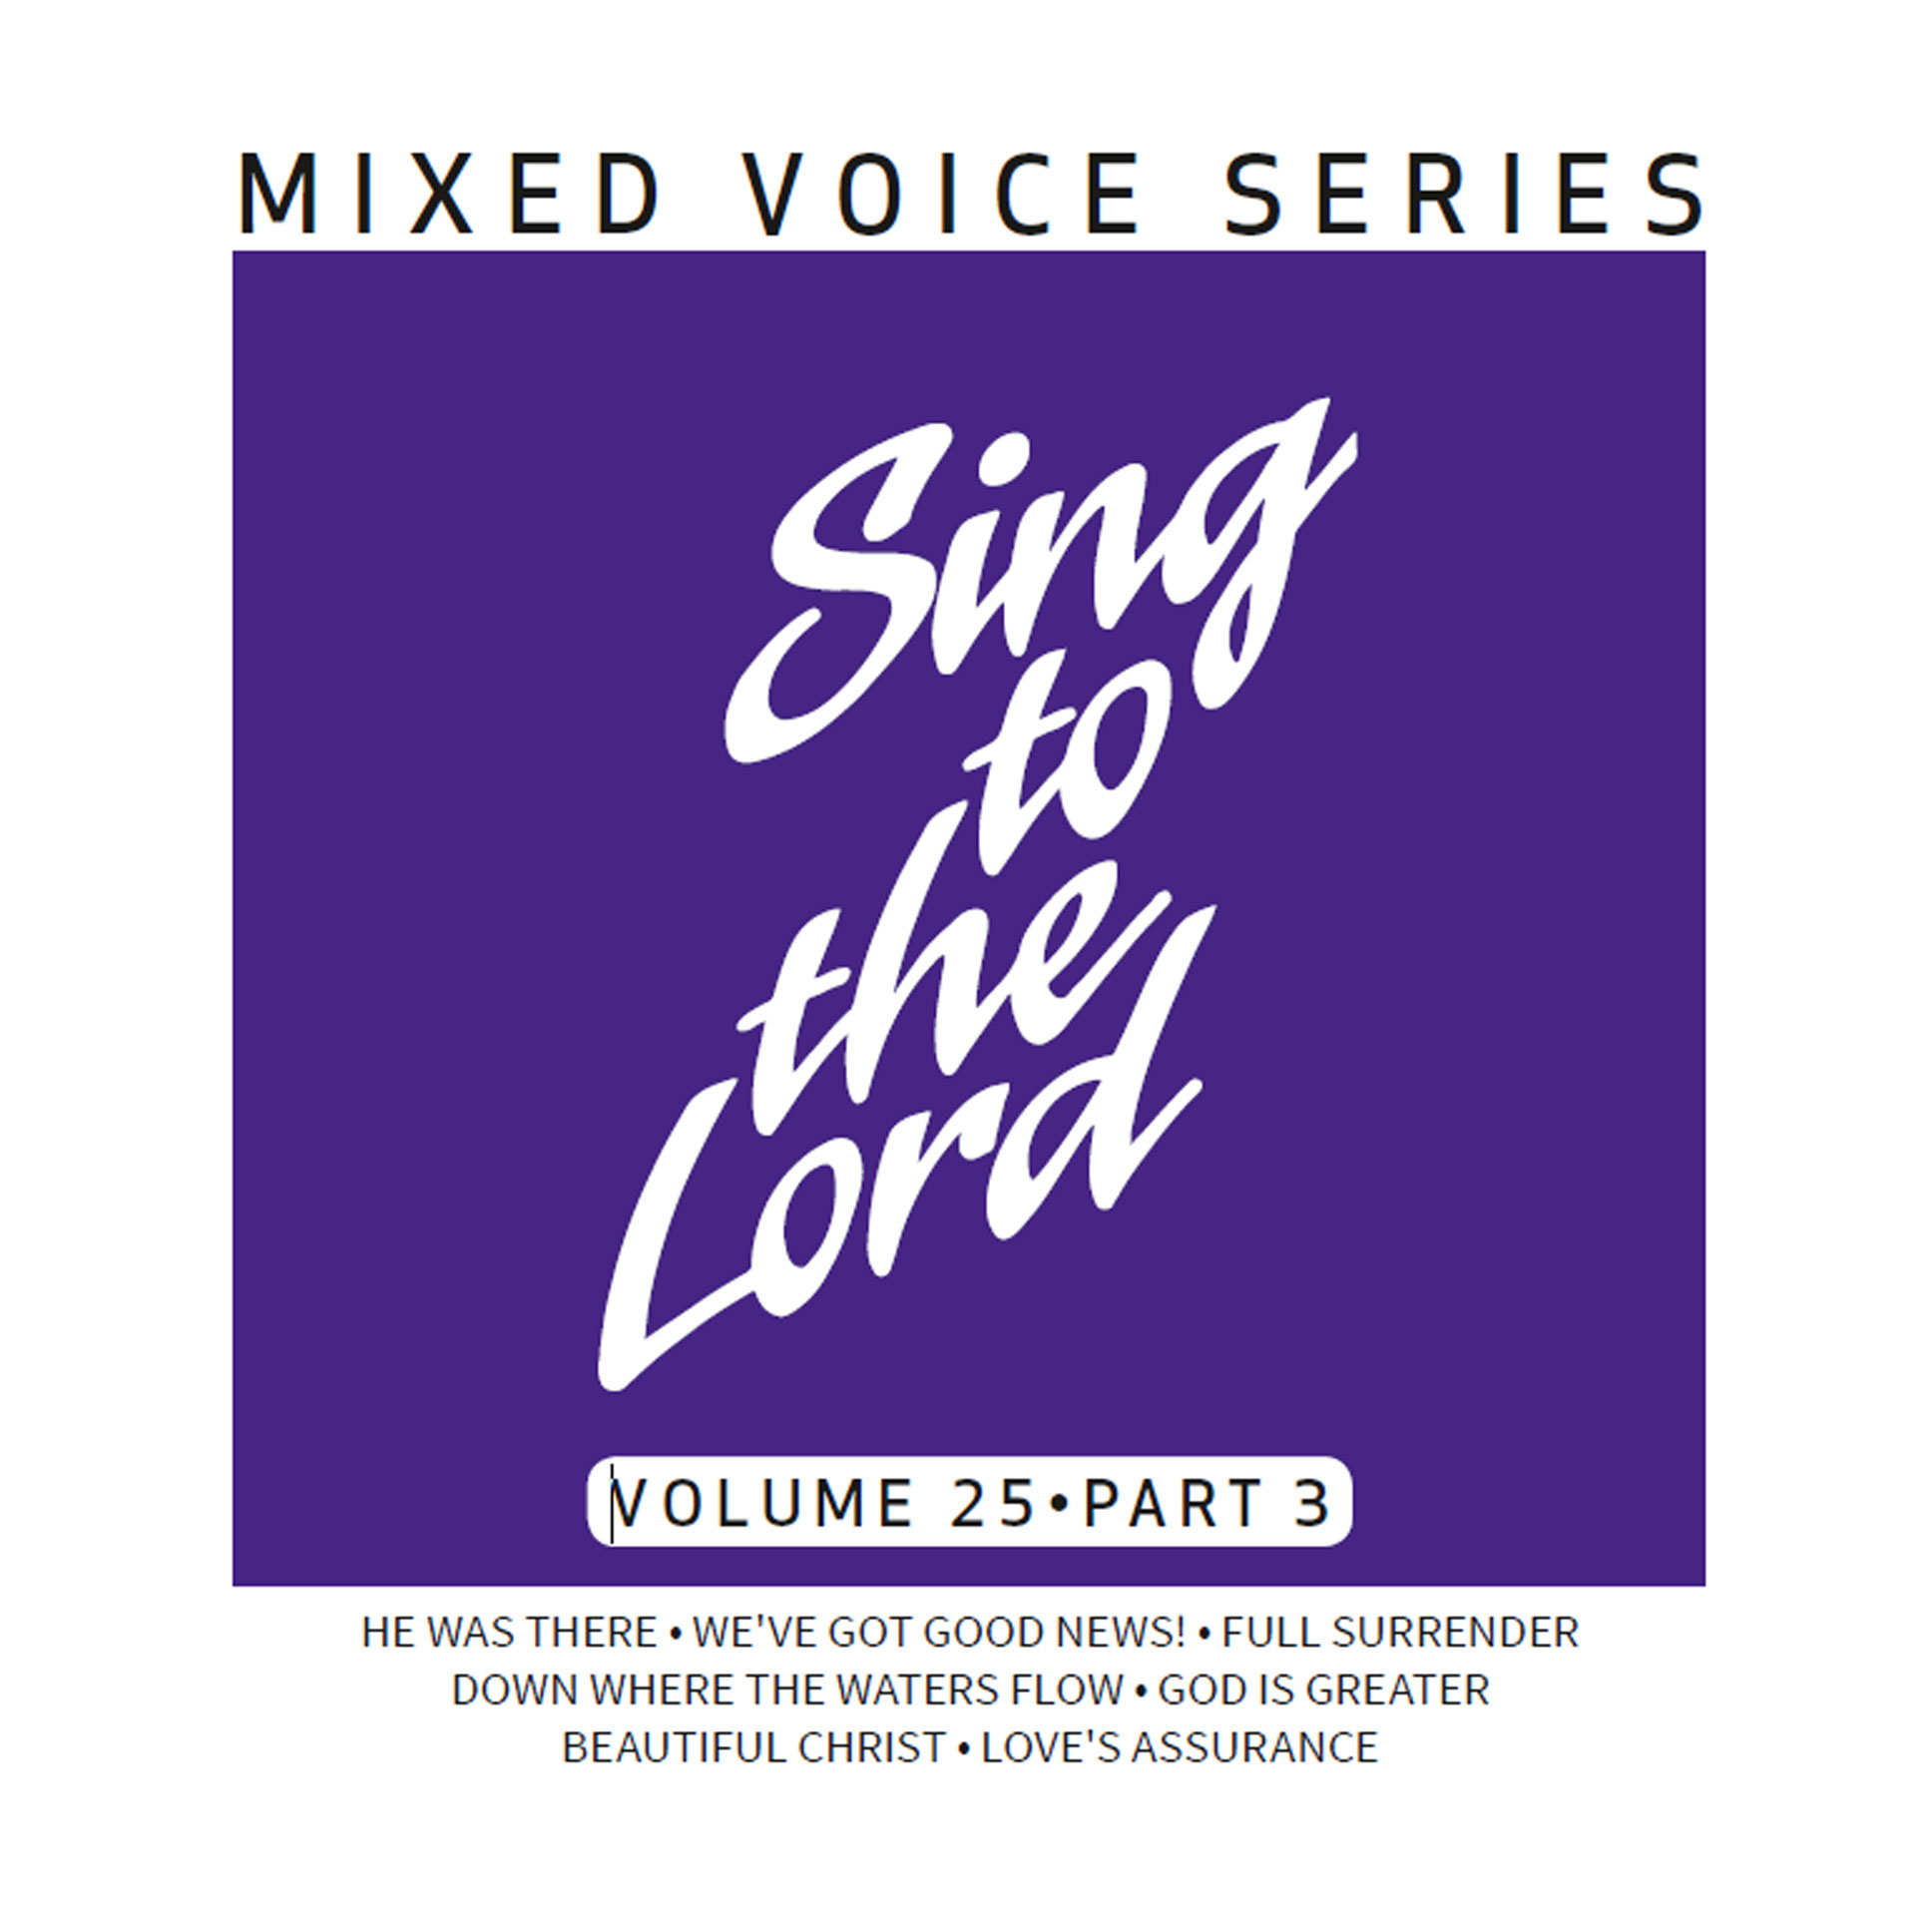 STTL Mixed Voice Series Volume 25 Part 3 - Download